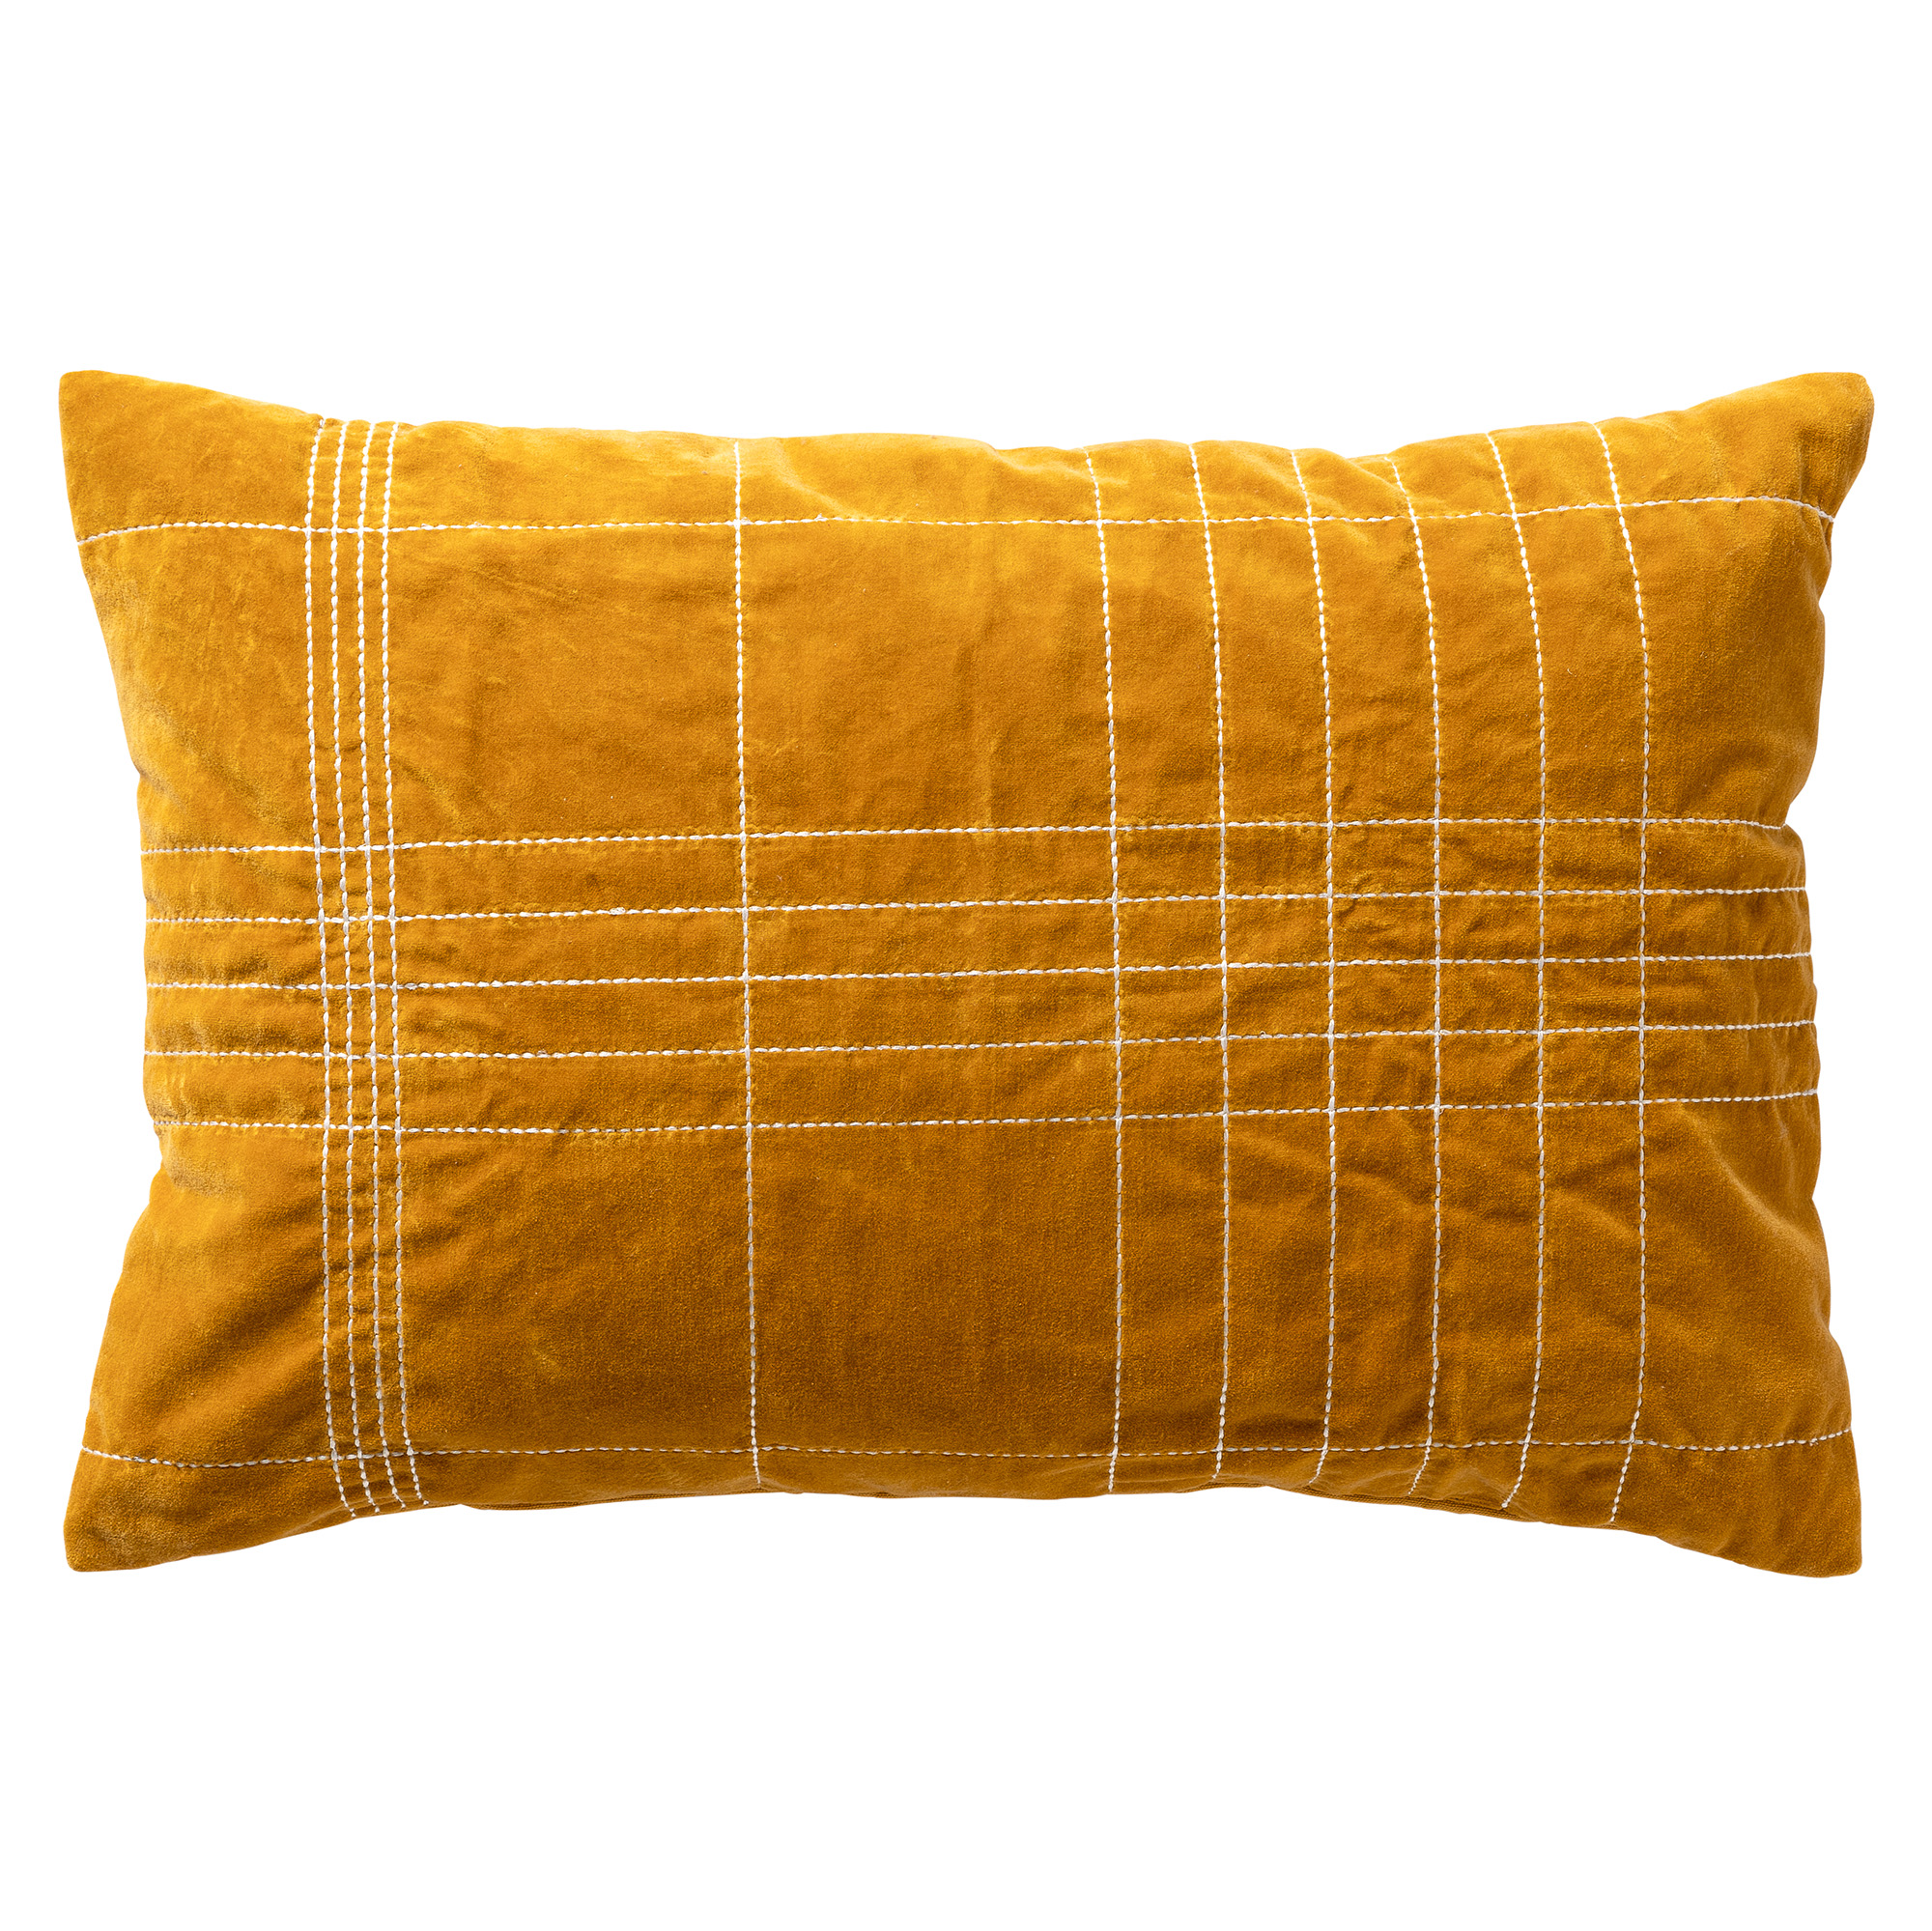 SELAH - Sierkussen 40x60 cm - velvet – subtiel ruitpatroon - Chai Tea - geel